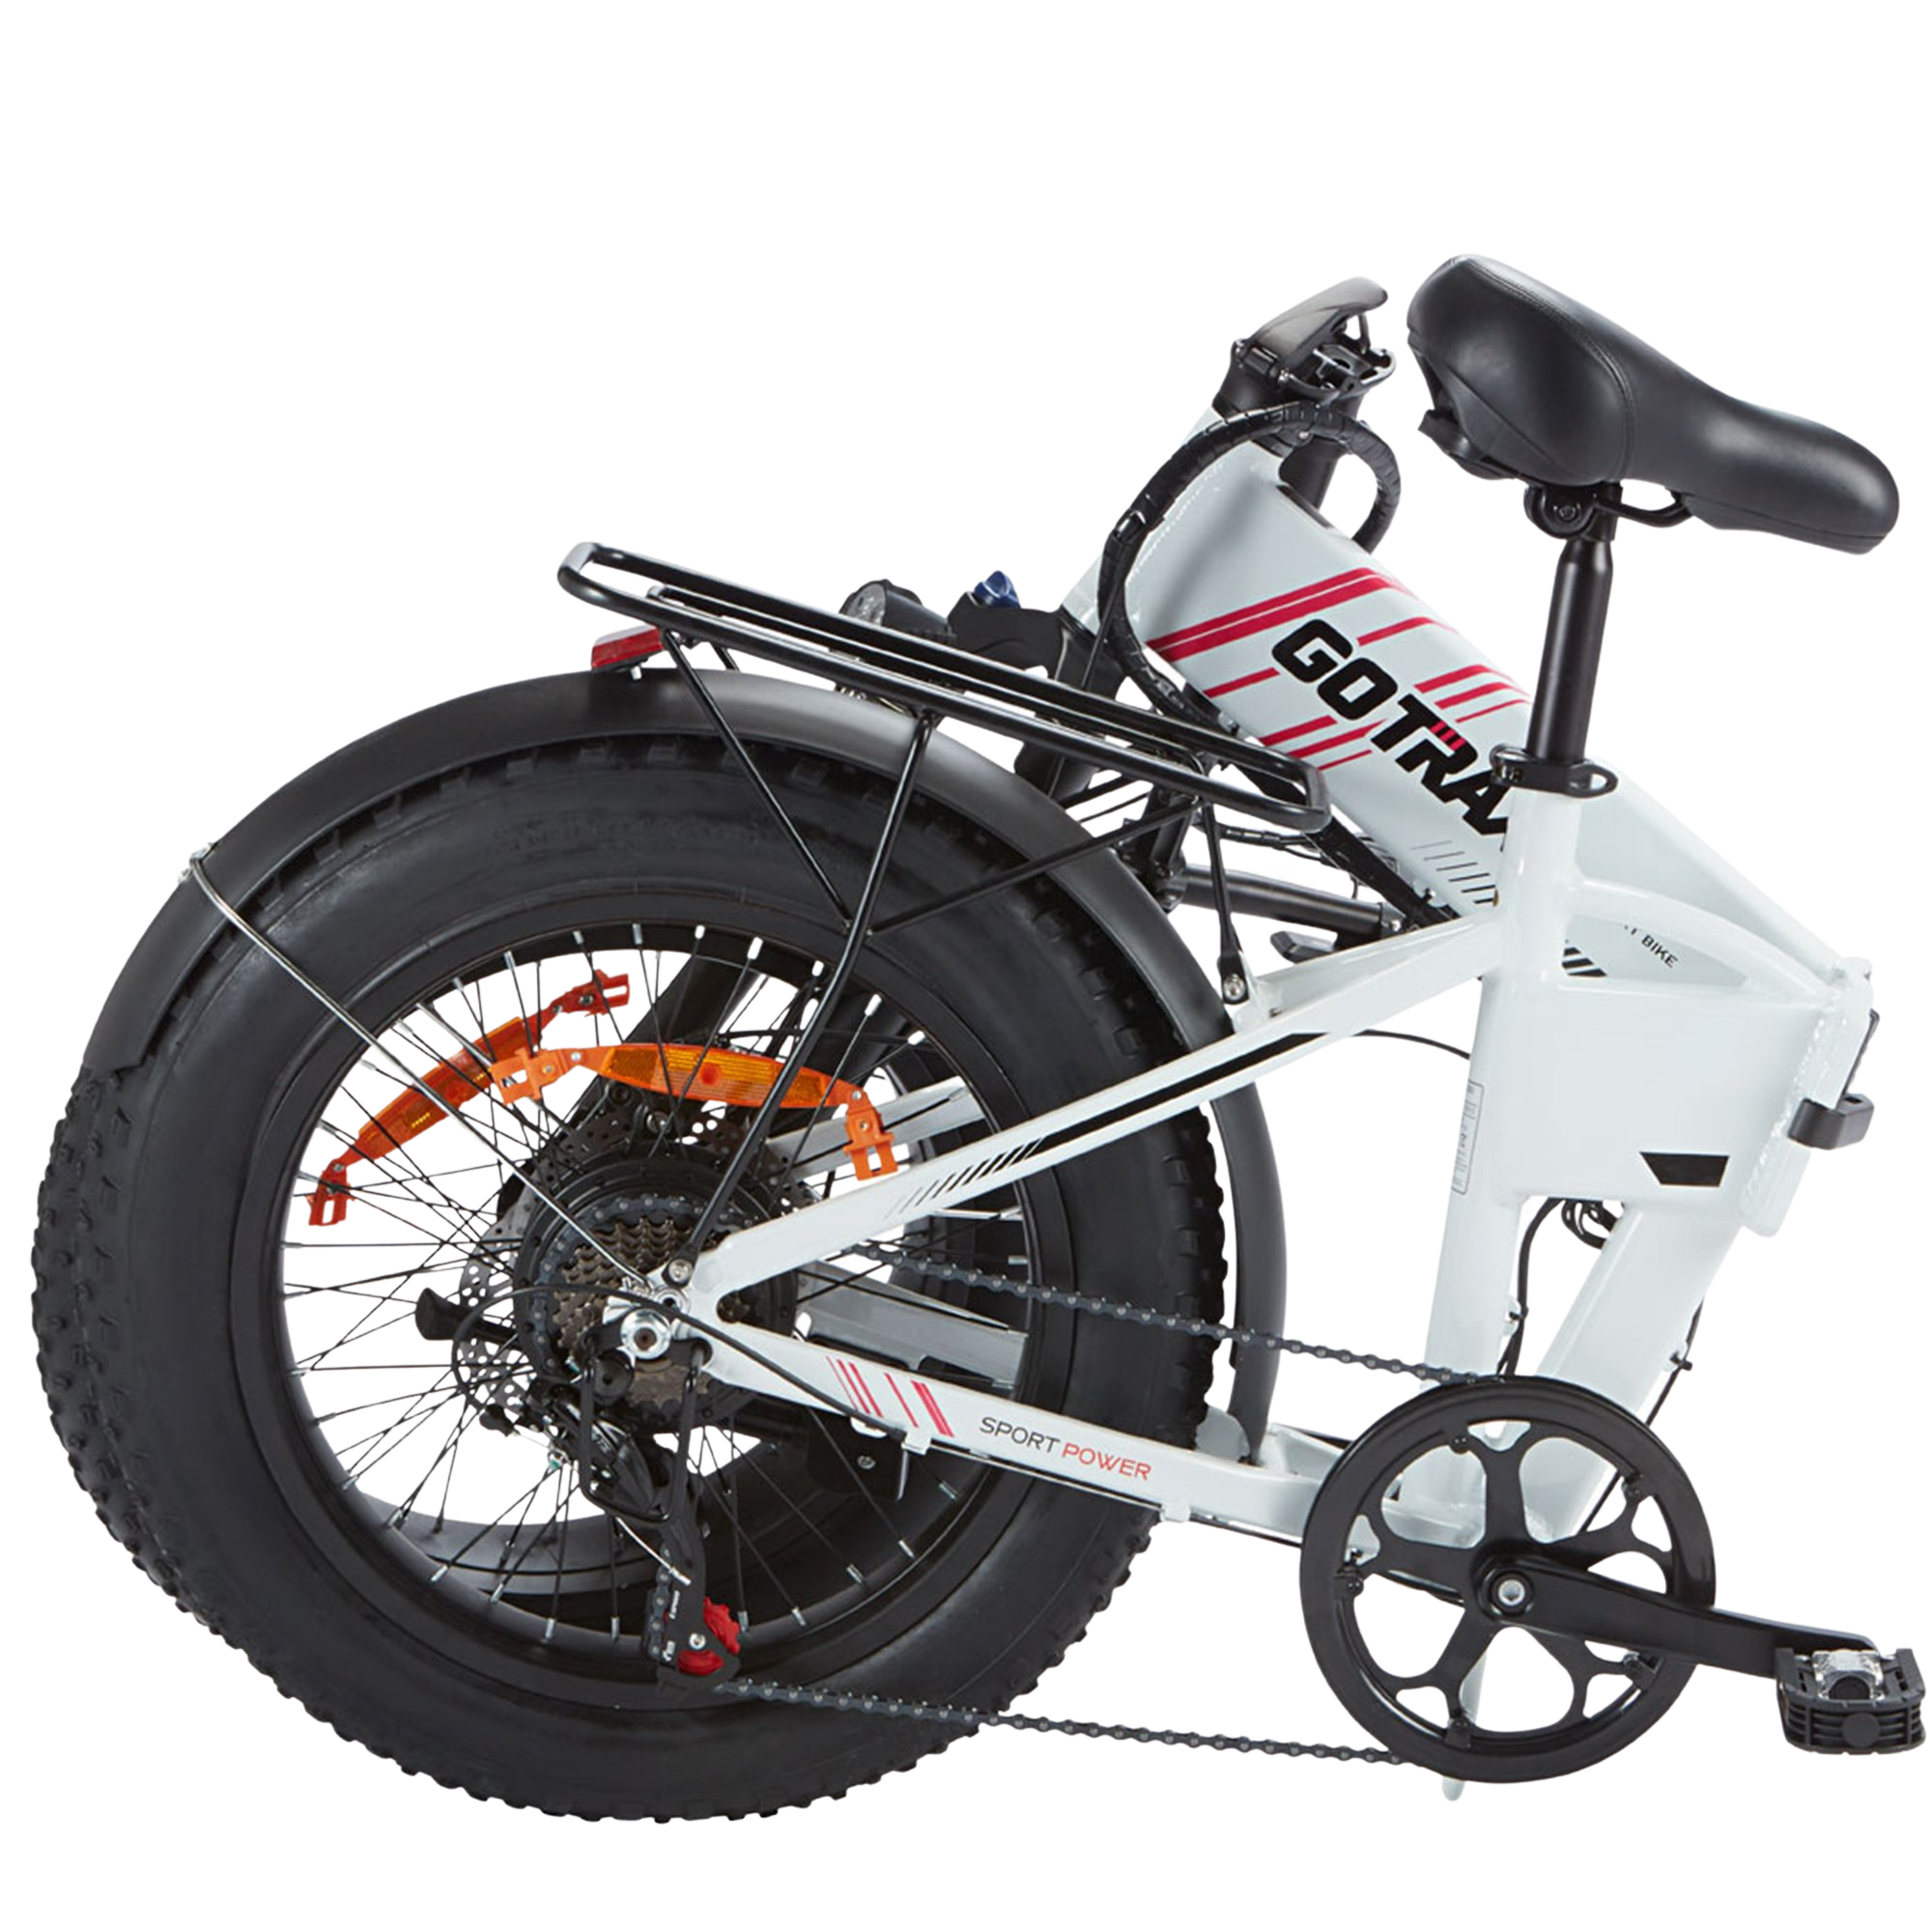 Gotrax EBE4 Adult Multi-terrain and Folding Electric Bike 20"-80KM(PAS Range) & 32KPH Max Speed